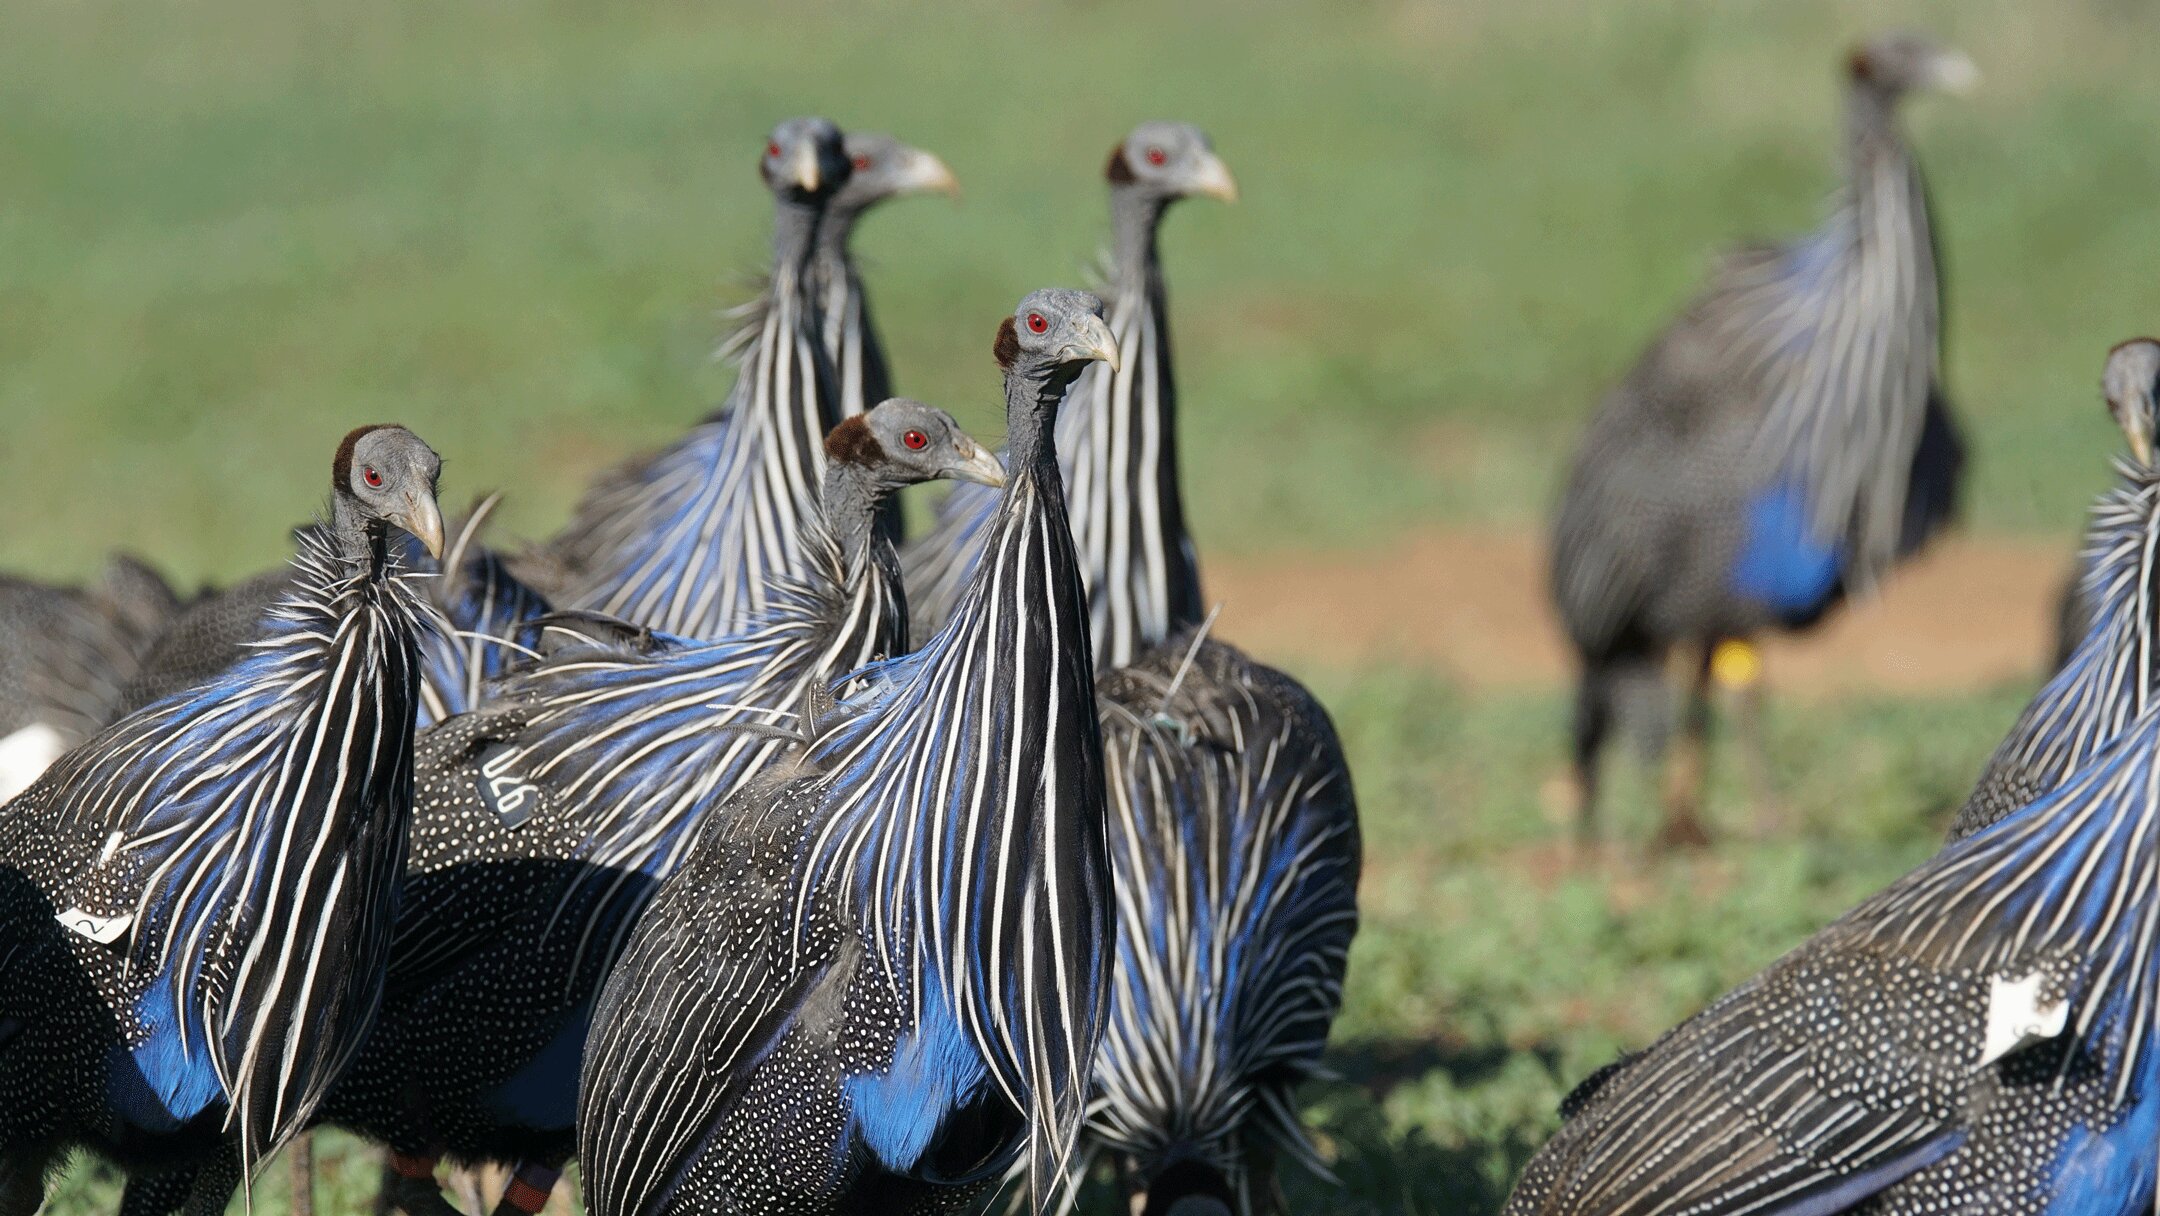 Vulturine guineafowl move across the landscape in large groups. (James Klarevas)